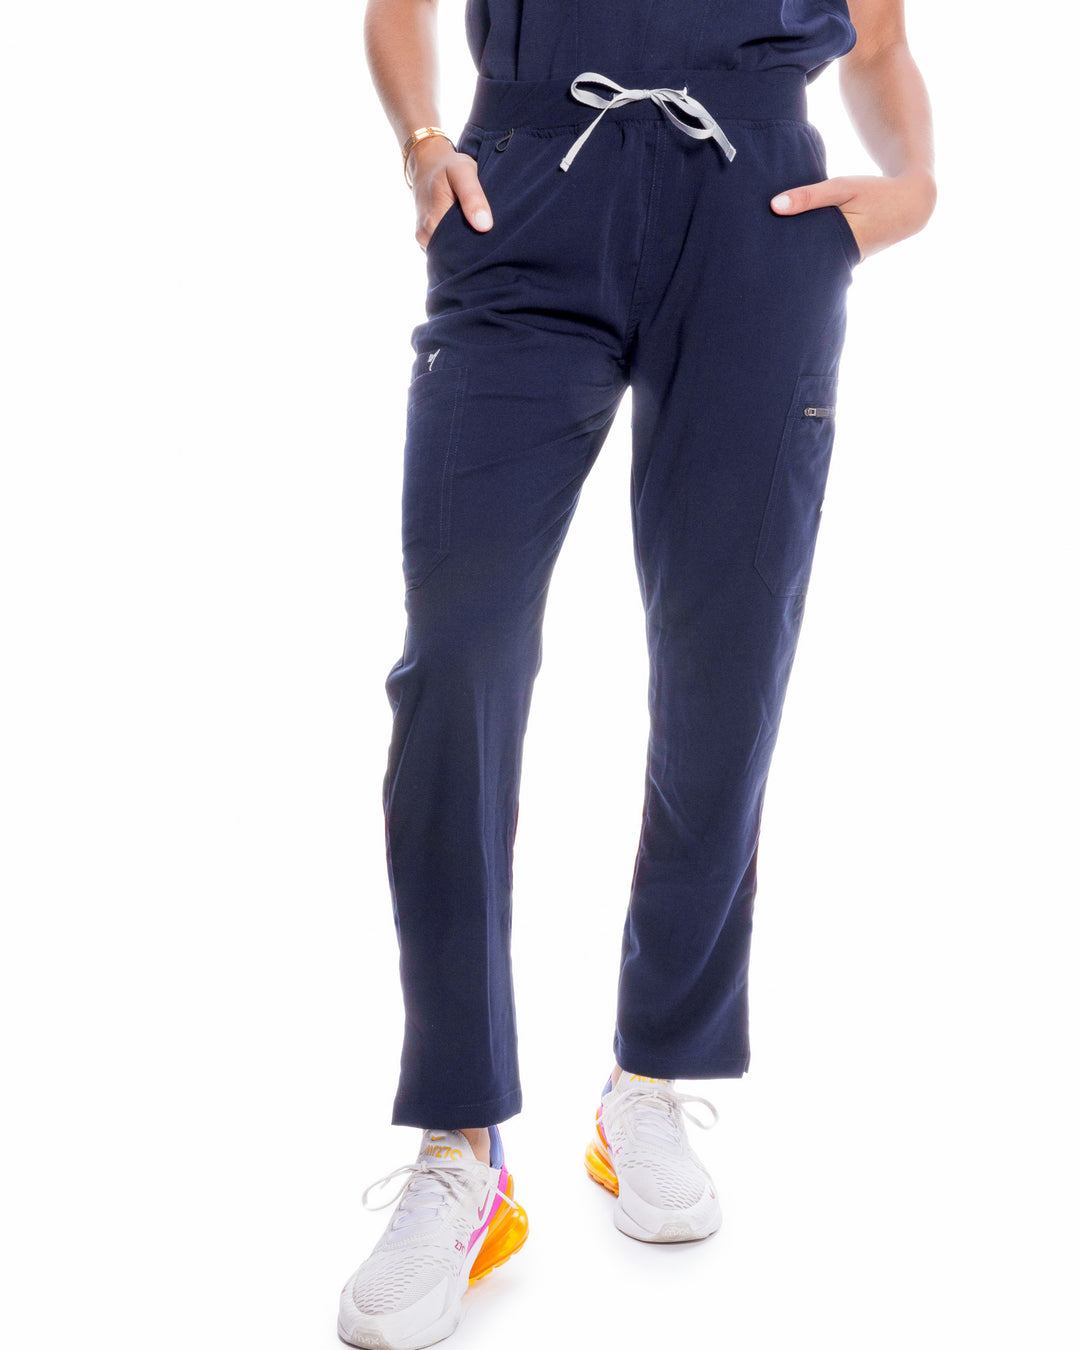 Women's Navy Blue Classic Scrub Pants